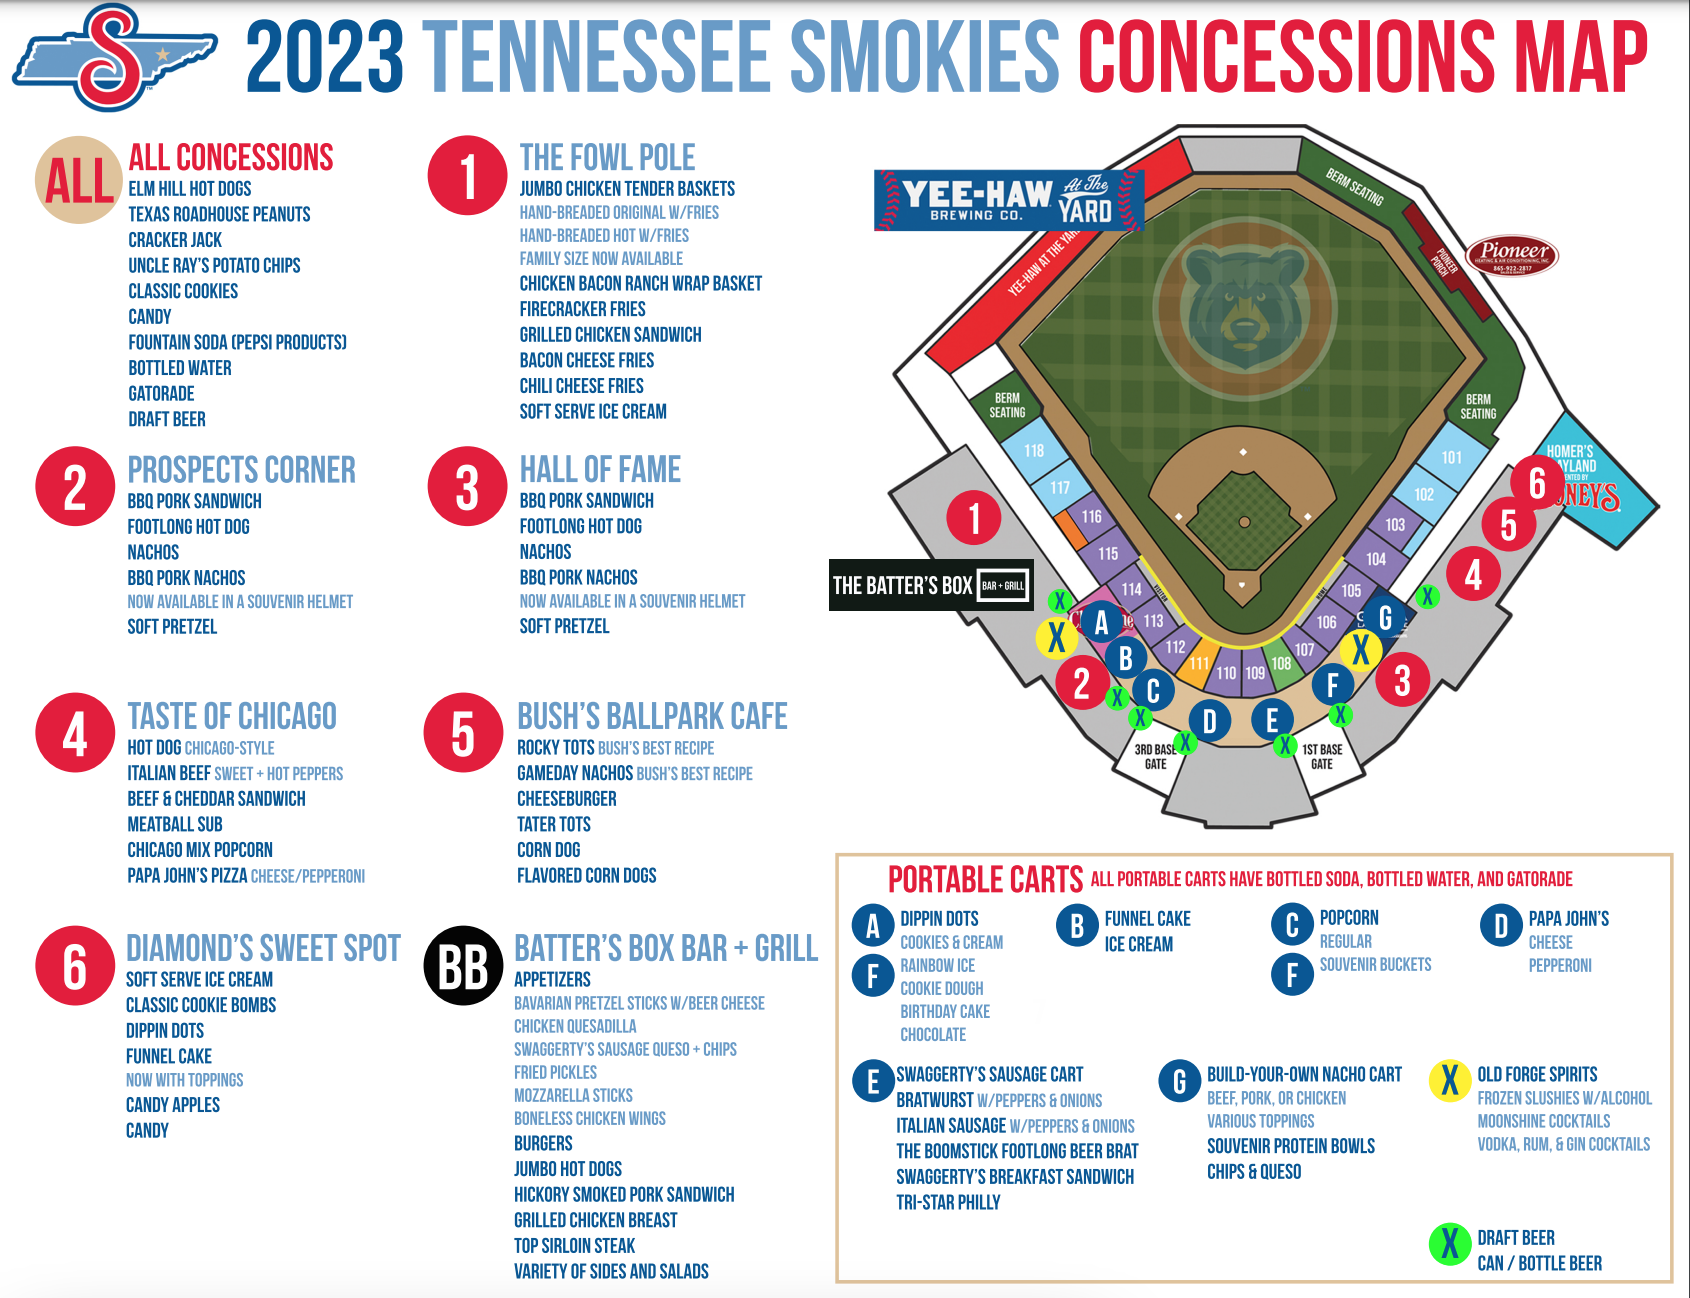 Tennessee Smokies announce 2024 season schedule with times | Smokies